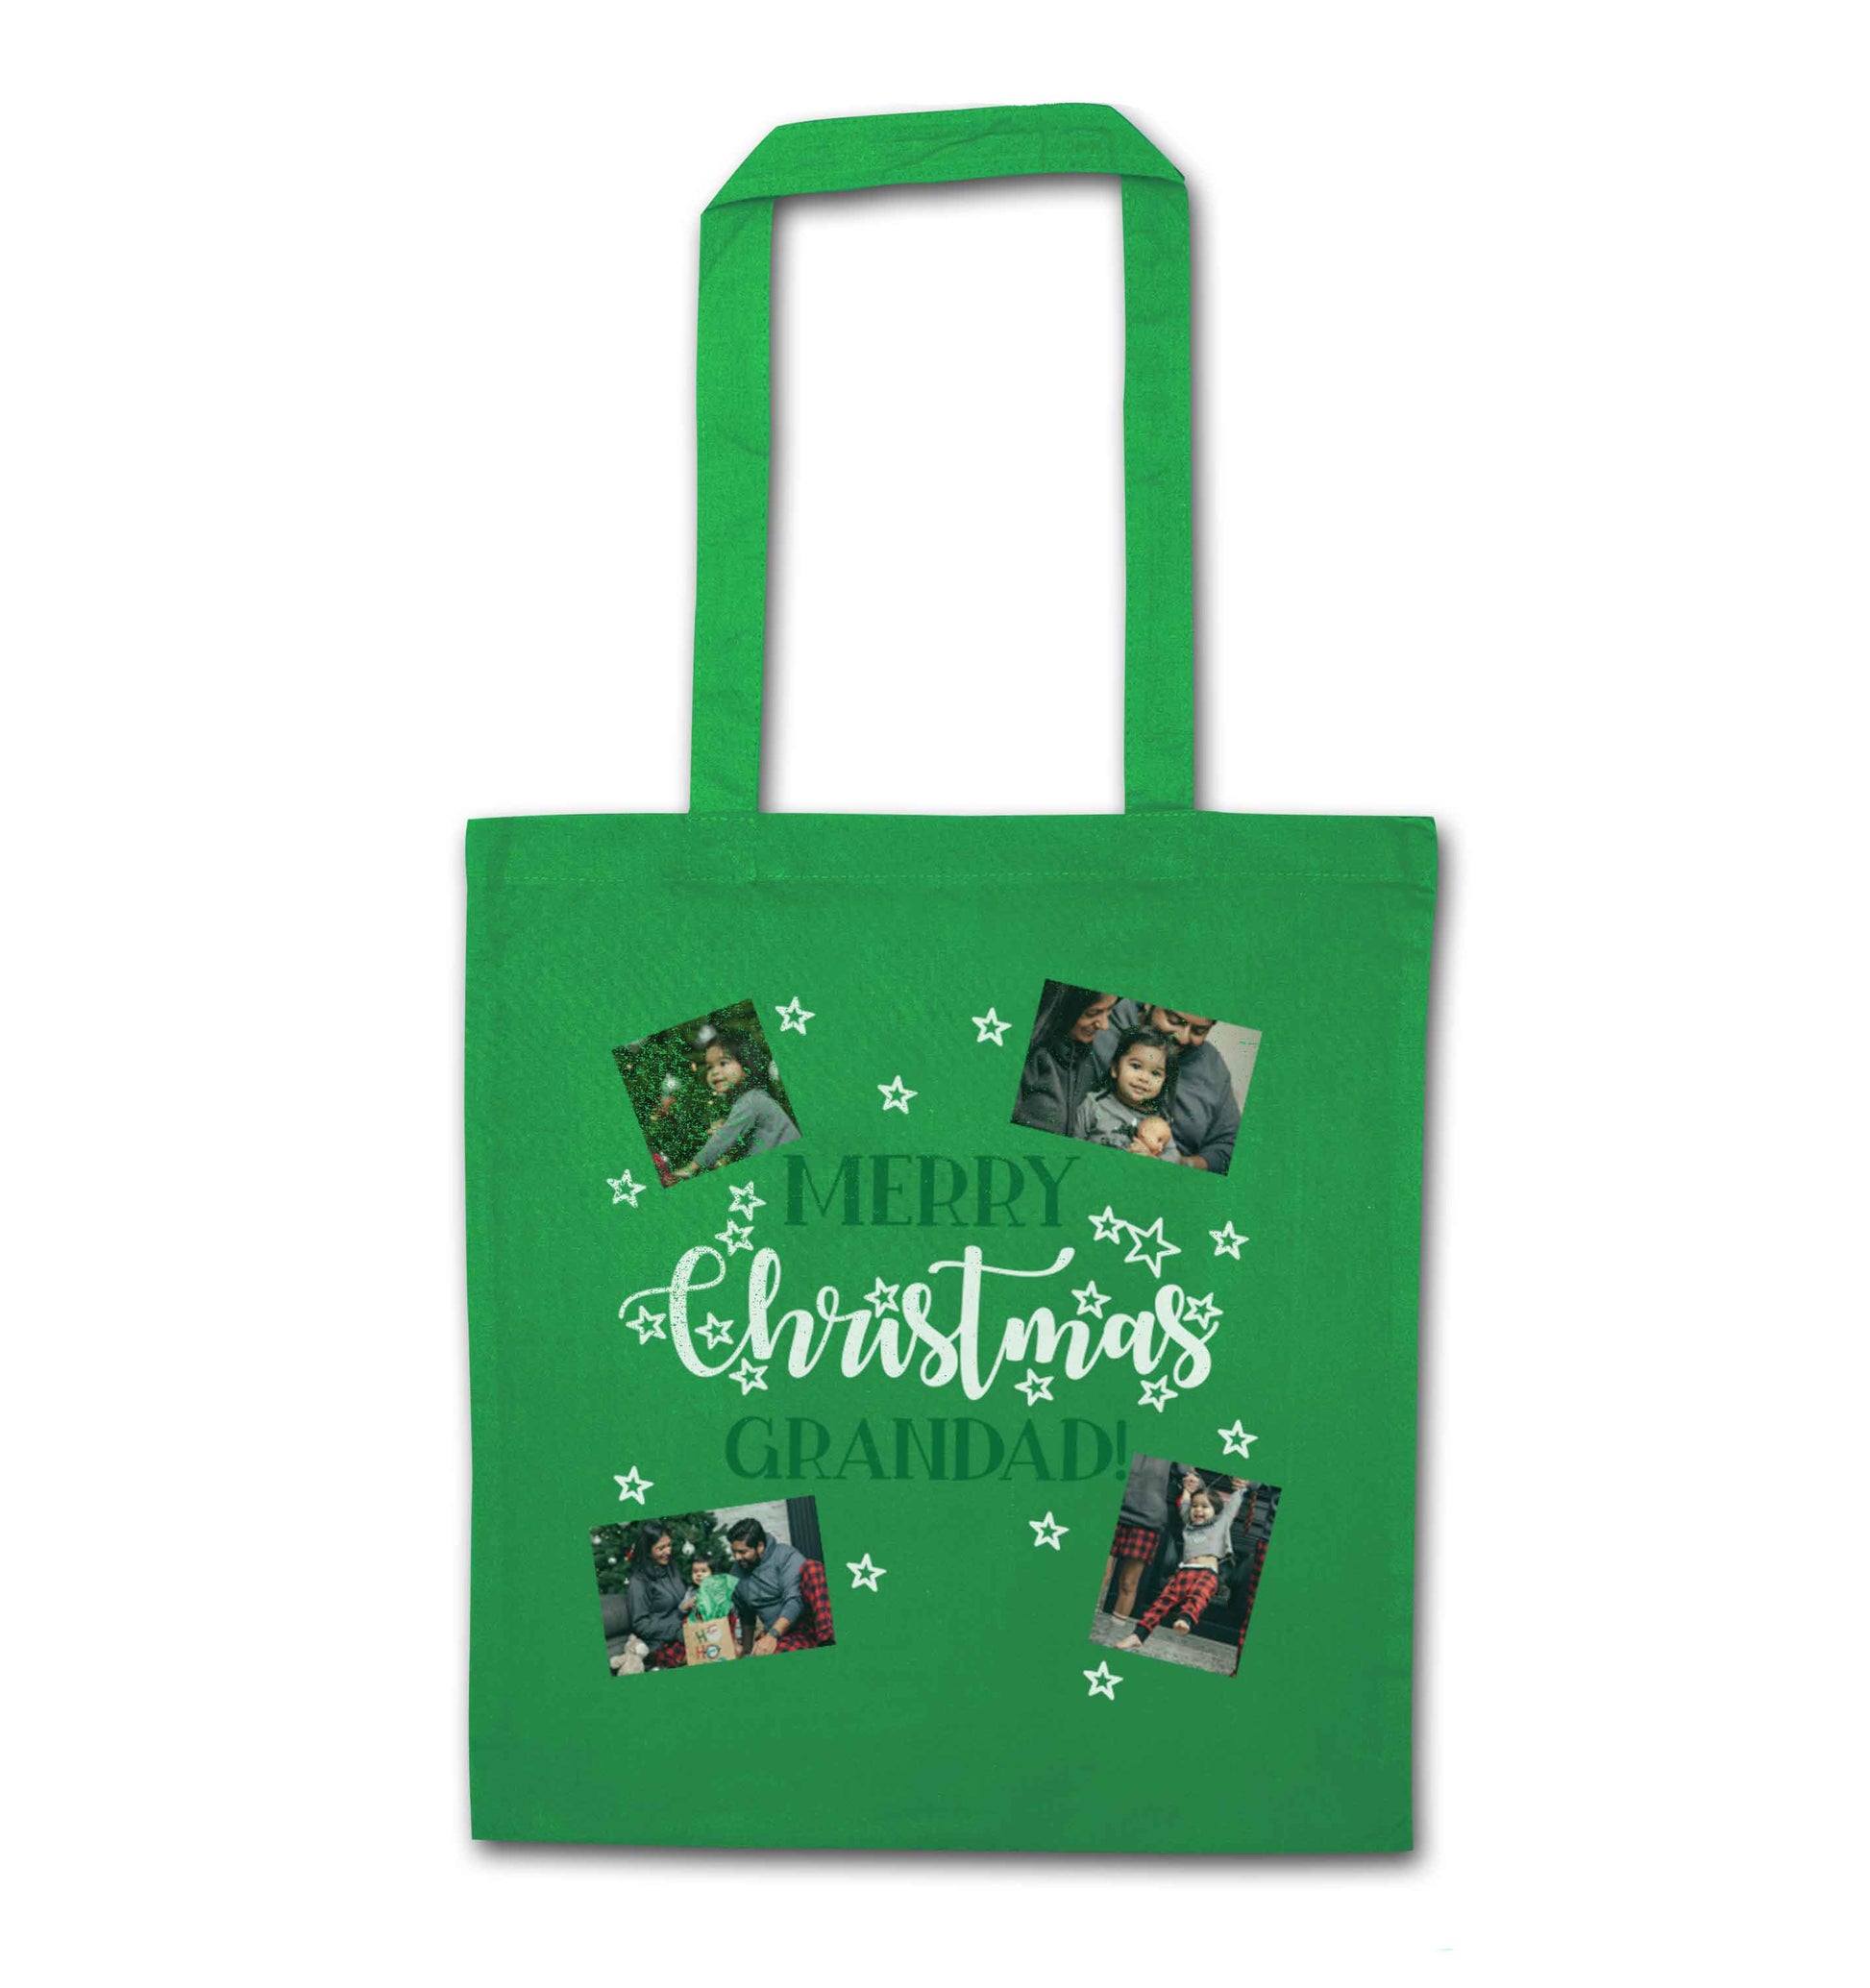 Merry Christmas grandad green tote bag